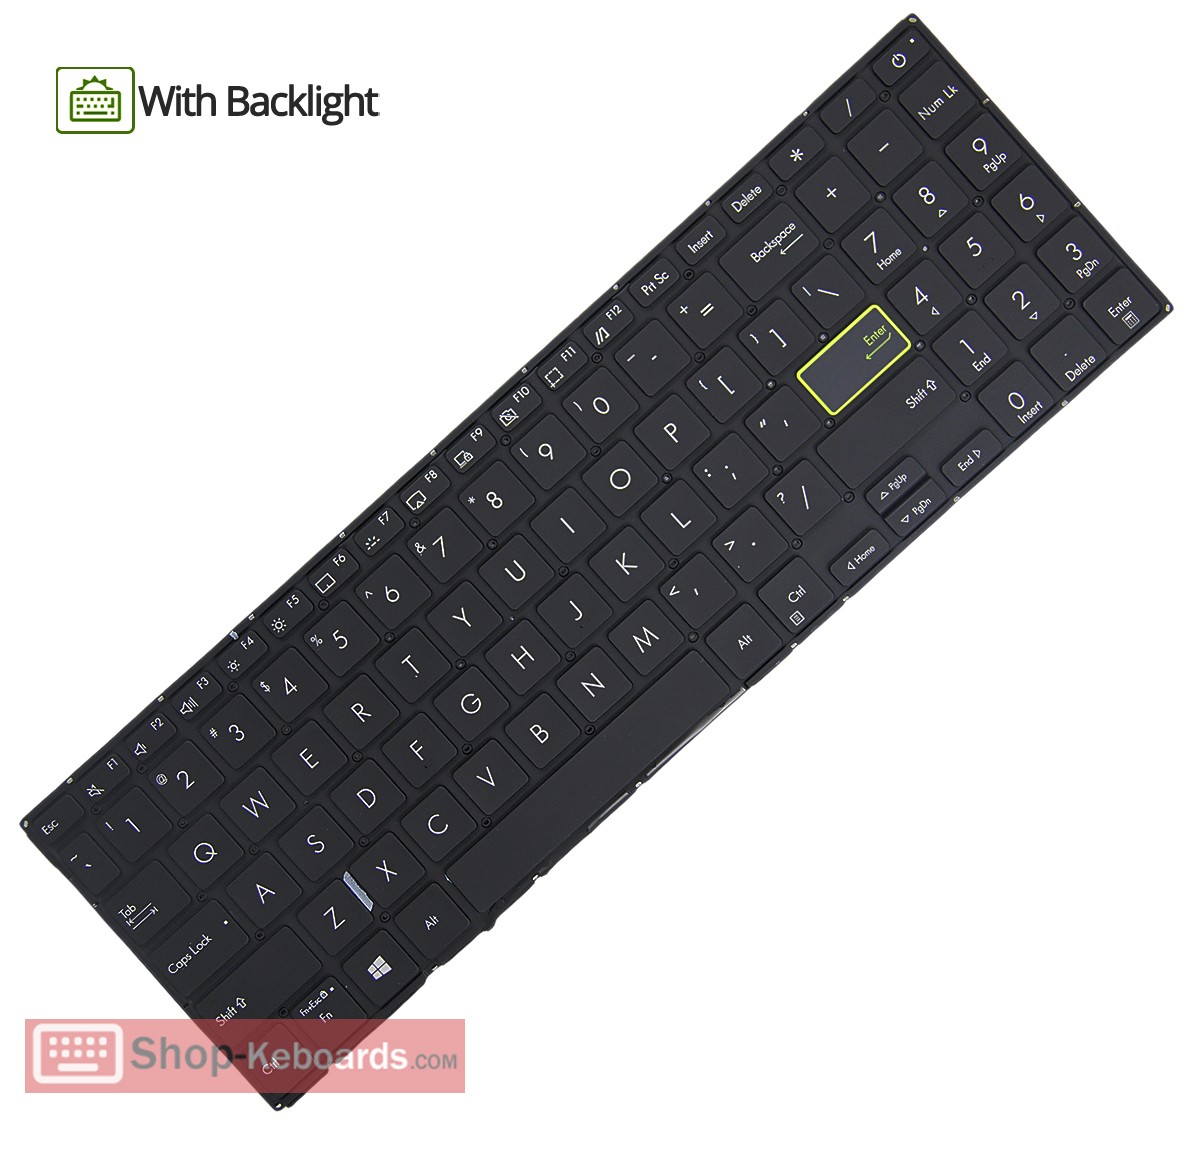 Asus AEBK4R00010 Keyboard replacement